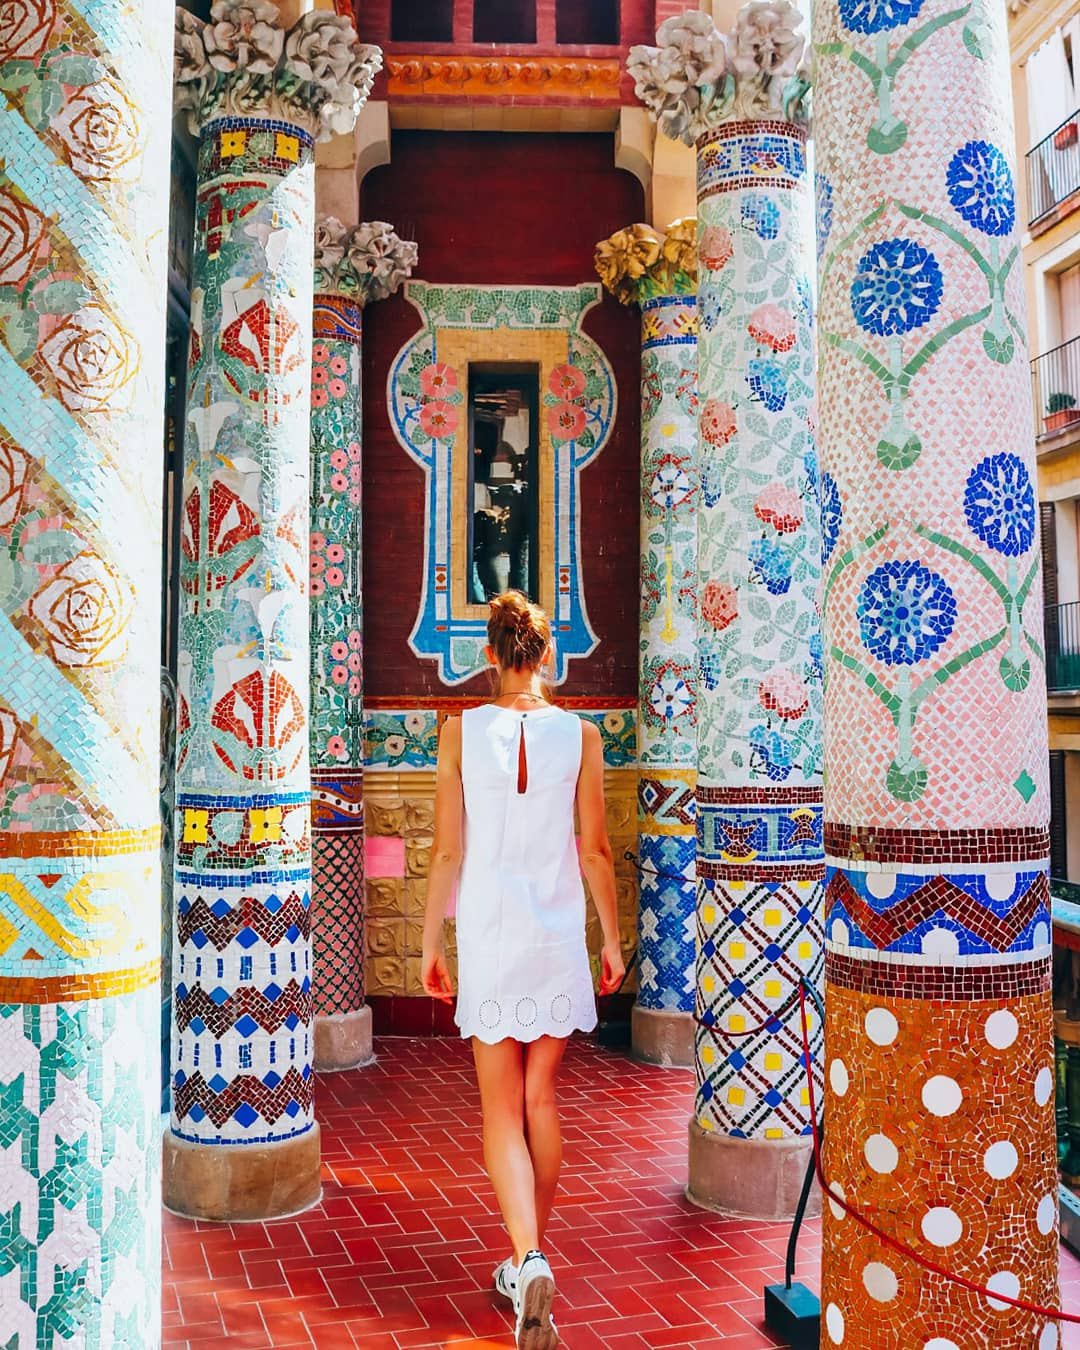 Palau de le Musica Catalana Barcelona Barcelona Instagram Guide | Travel Guide - Helena Bradbury | Barcelona Travel | Instagram Guide | Travel Destination | Spain Travel | Gaudi | Sagrada Familia | Photography | Photo Locations | Instagram Spots | P…